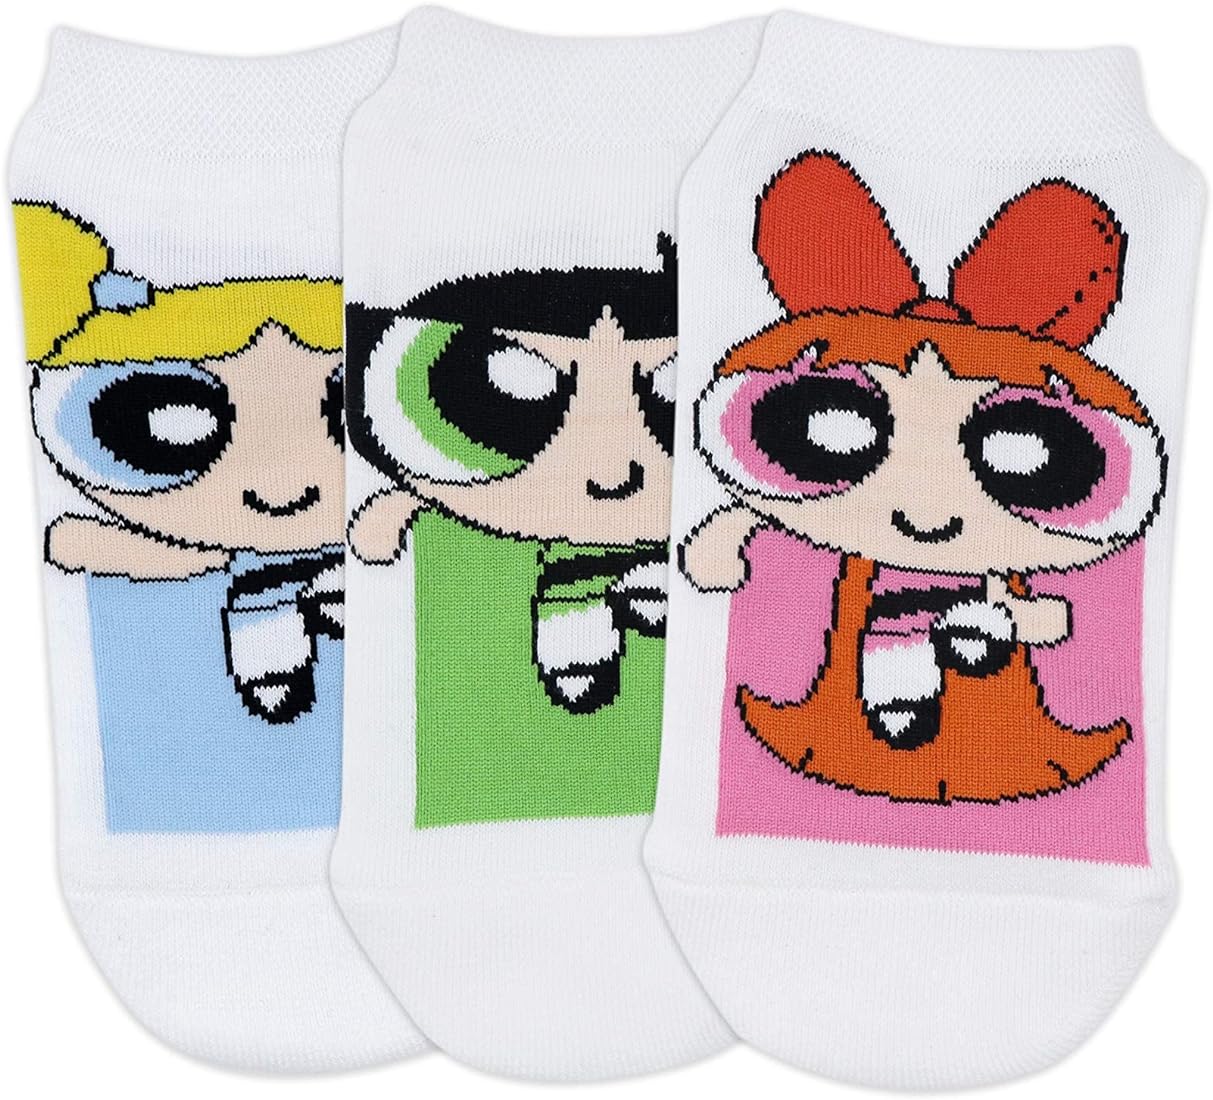 BALENZIA x Powerpuff Girl Box Set For Women-Lowcut Socks(Pack Of 3) (Free Size)